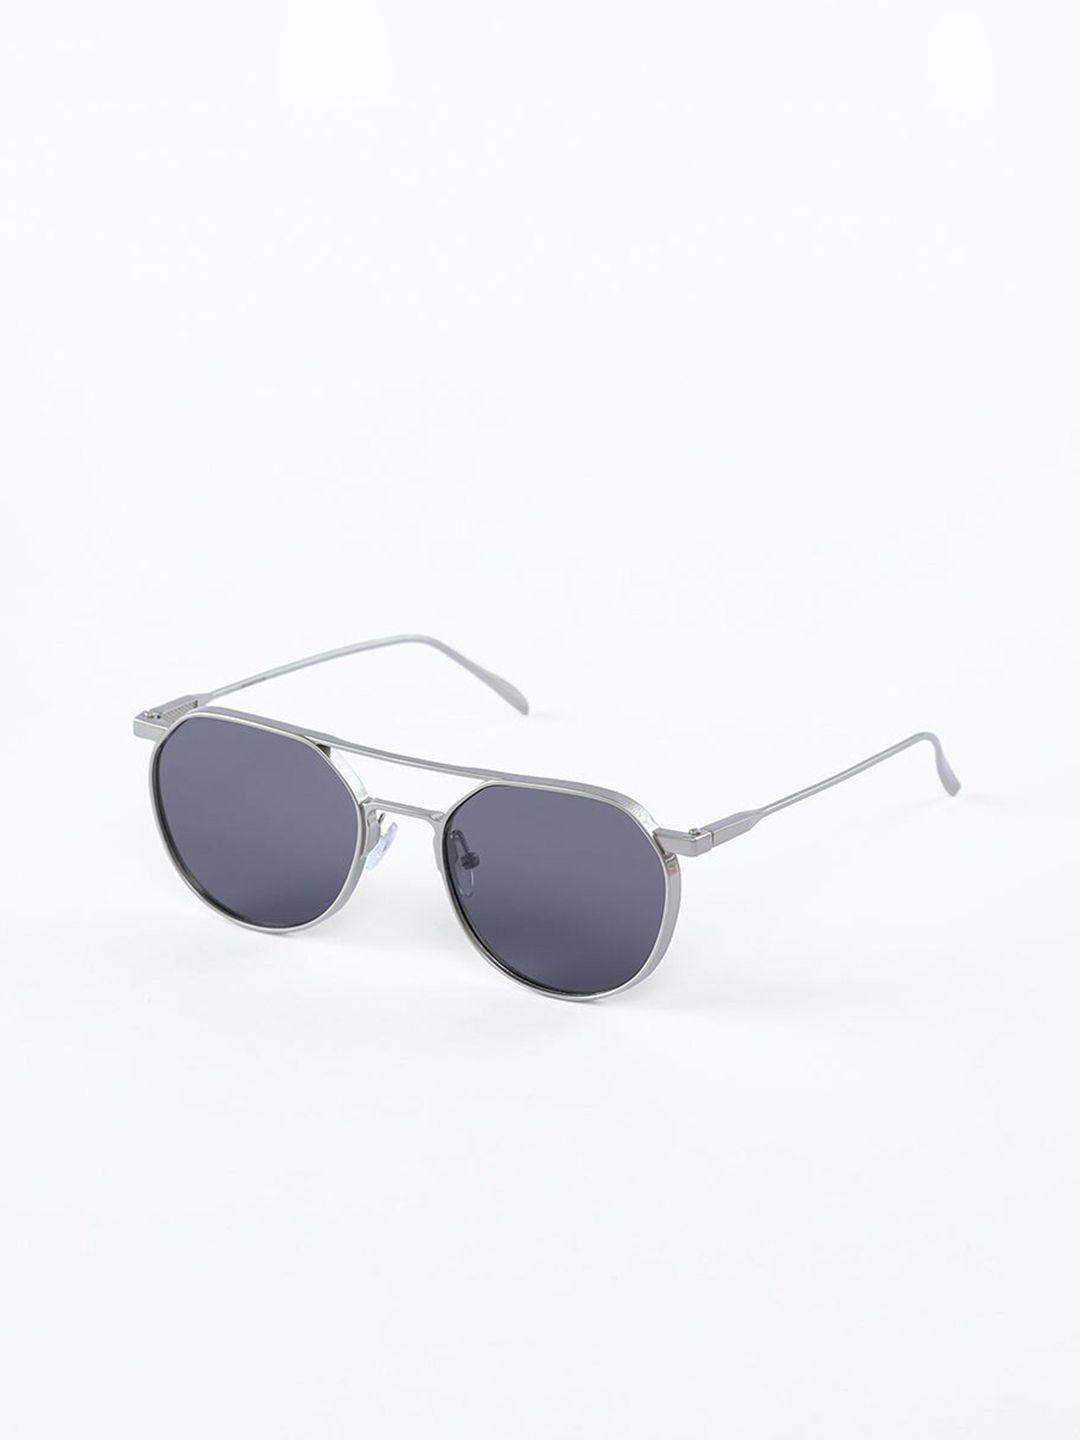 snitch men black aviator sunglasses with uv protected lens sunglasses